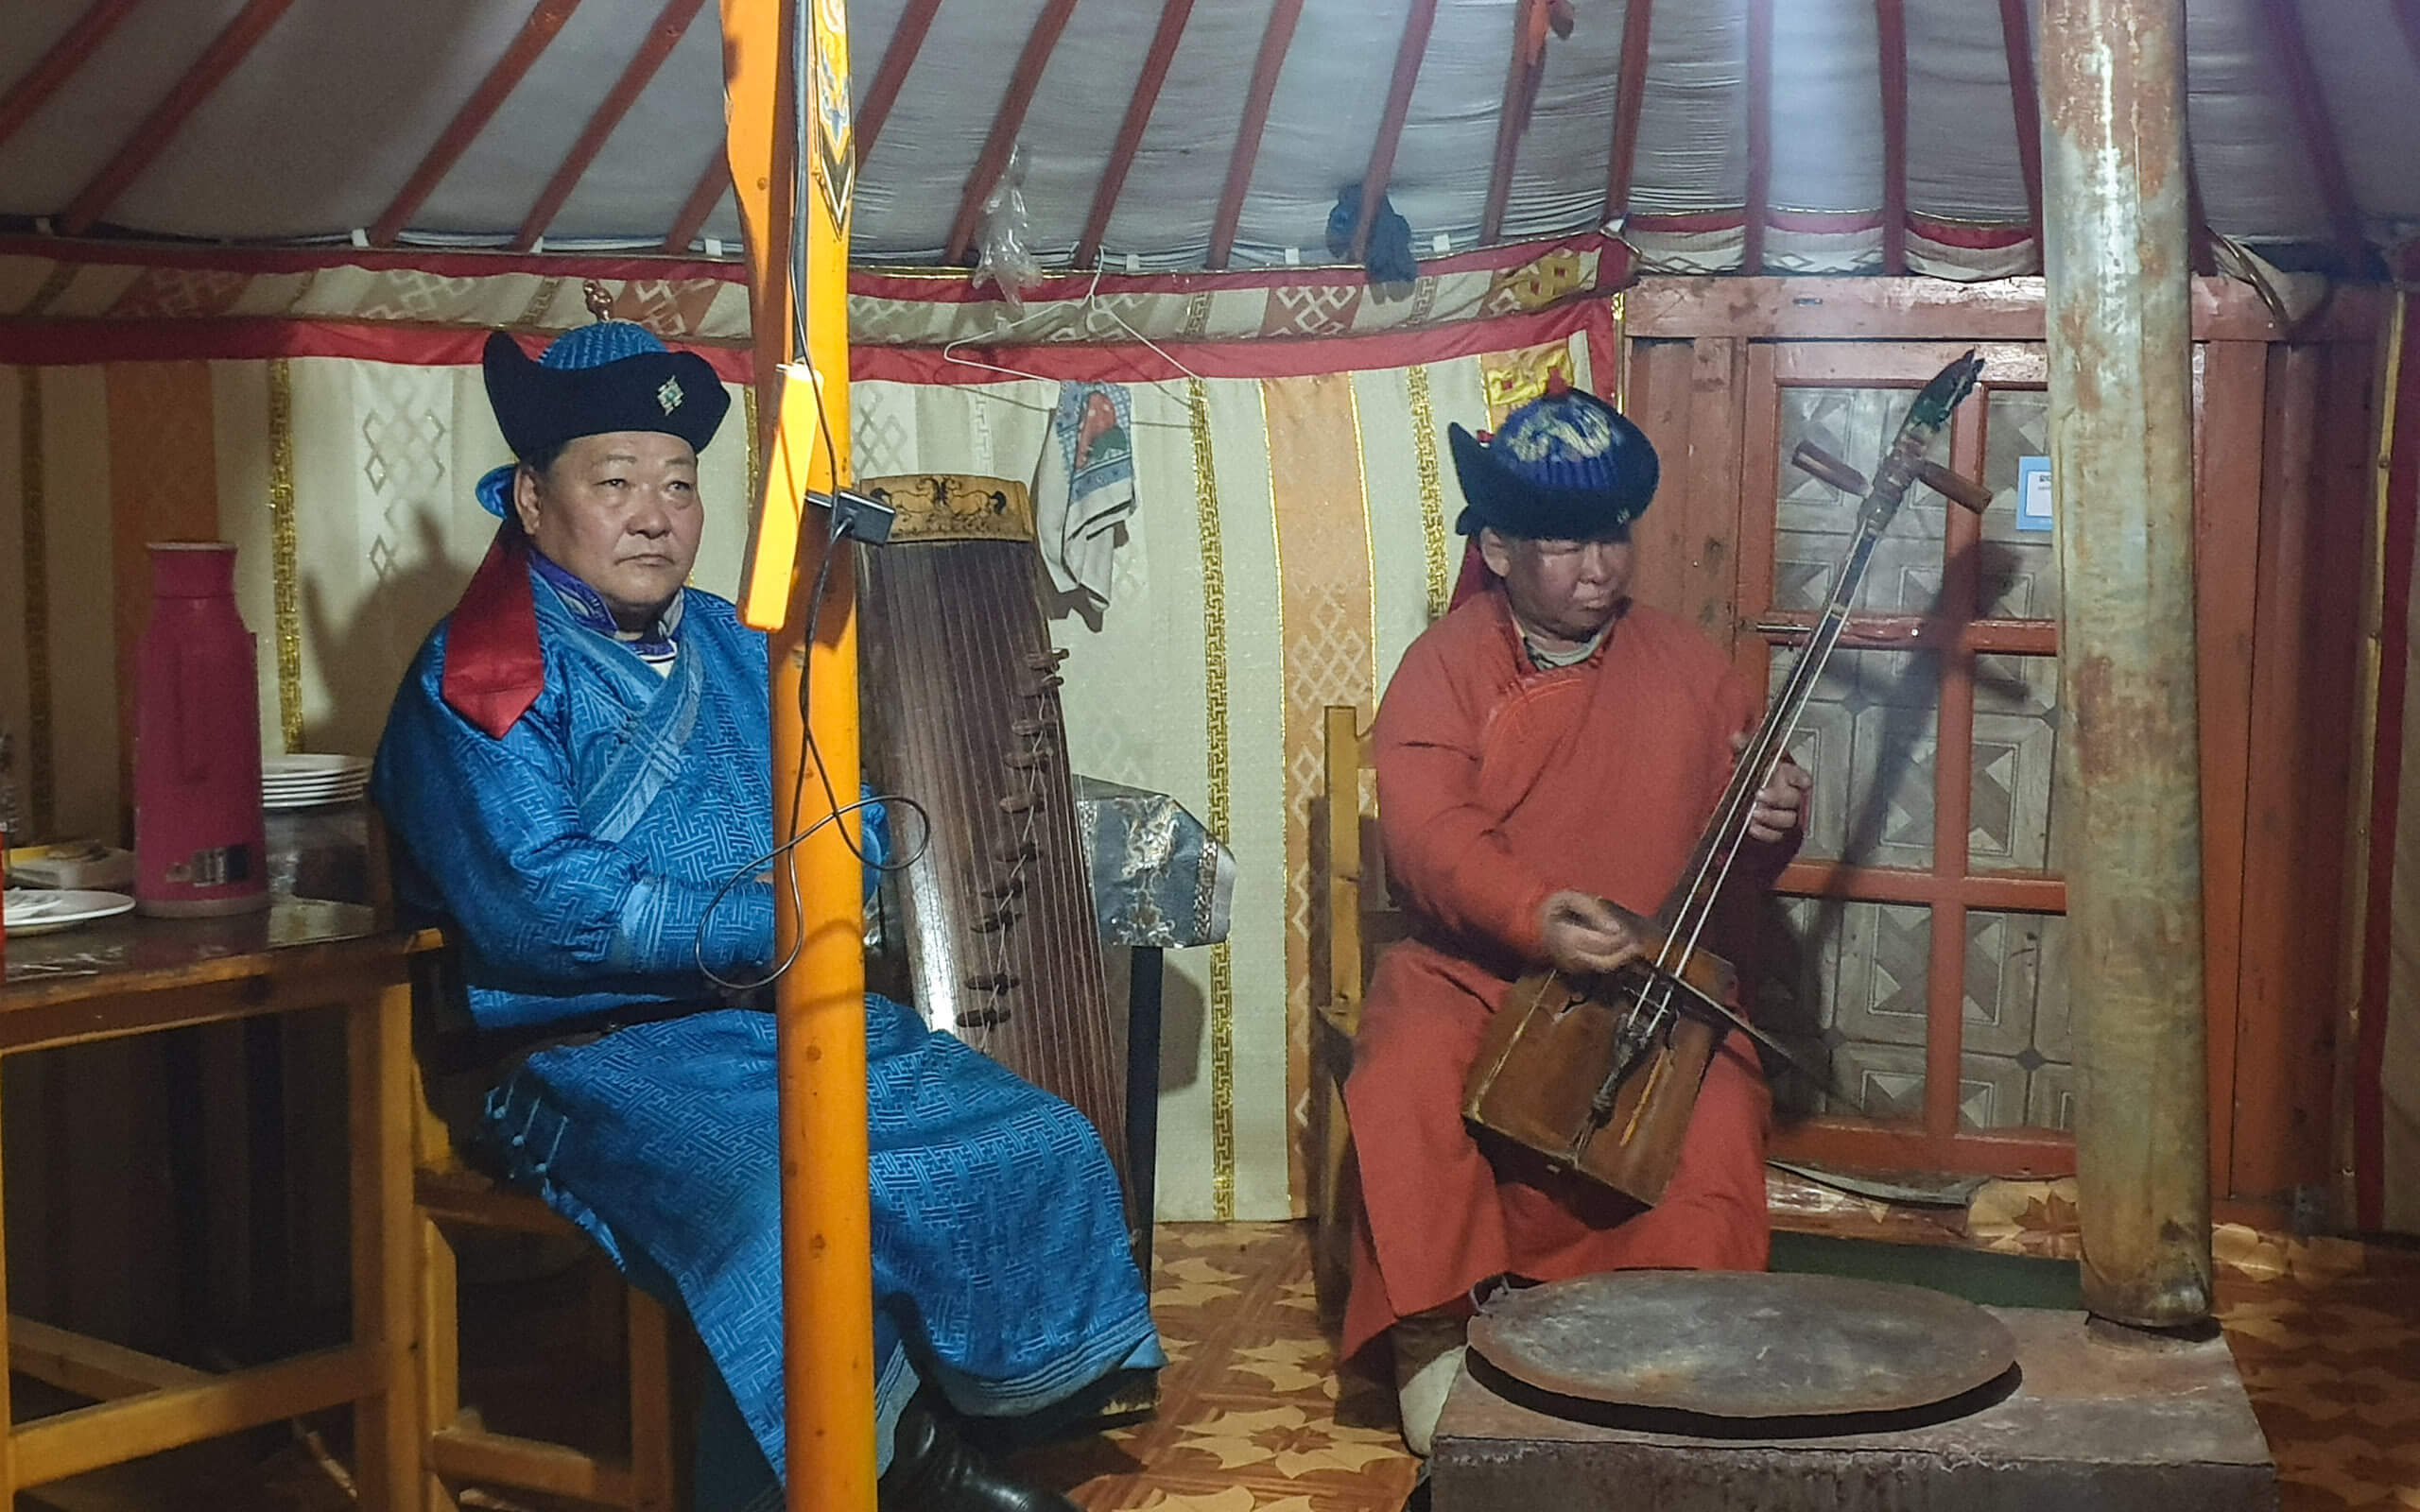 Mongolian traditional music